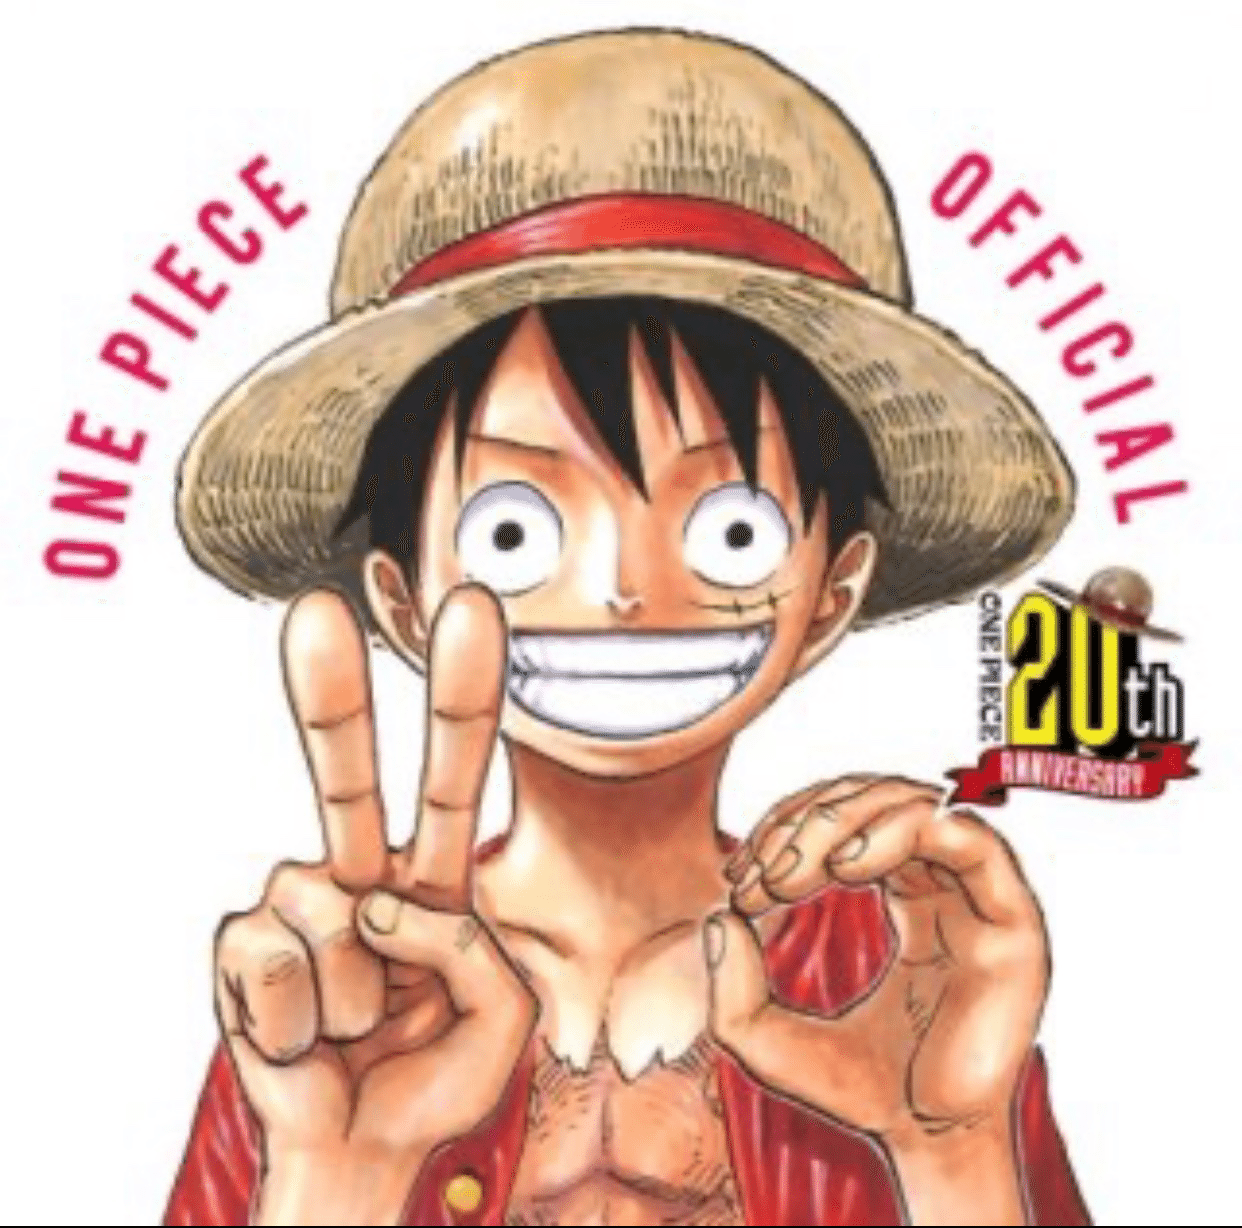 One Piece を更に楽しむ為に 三日月 Note